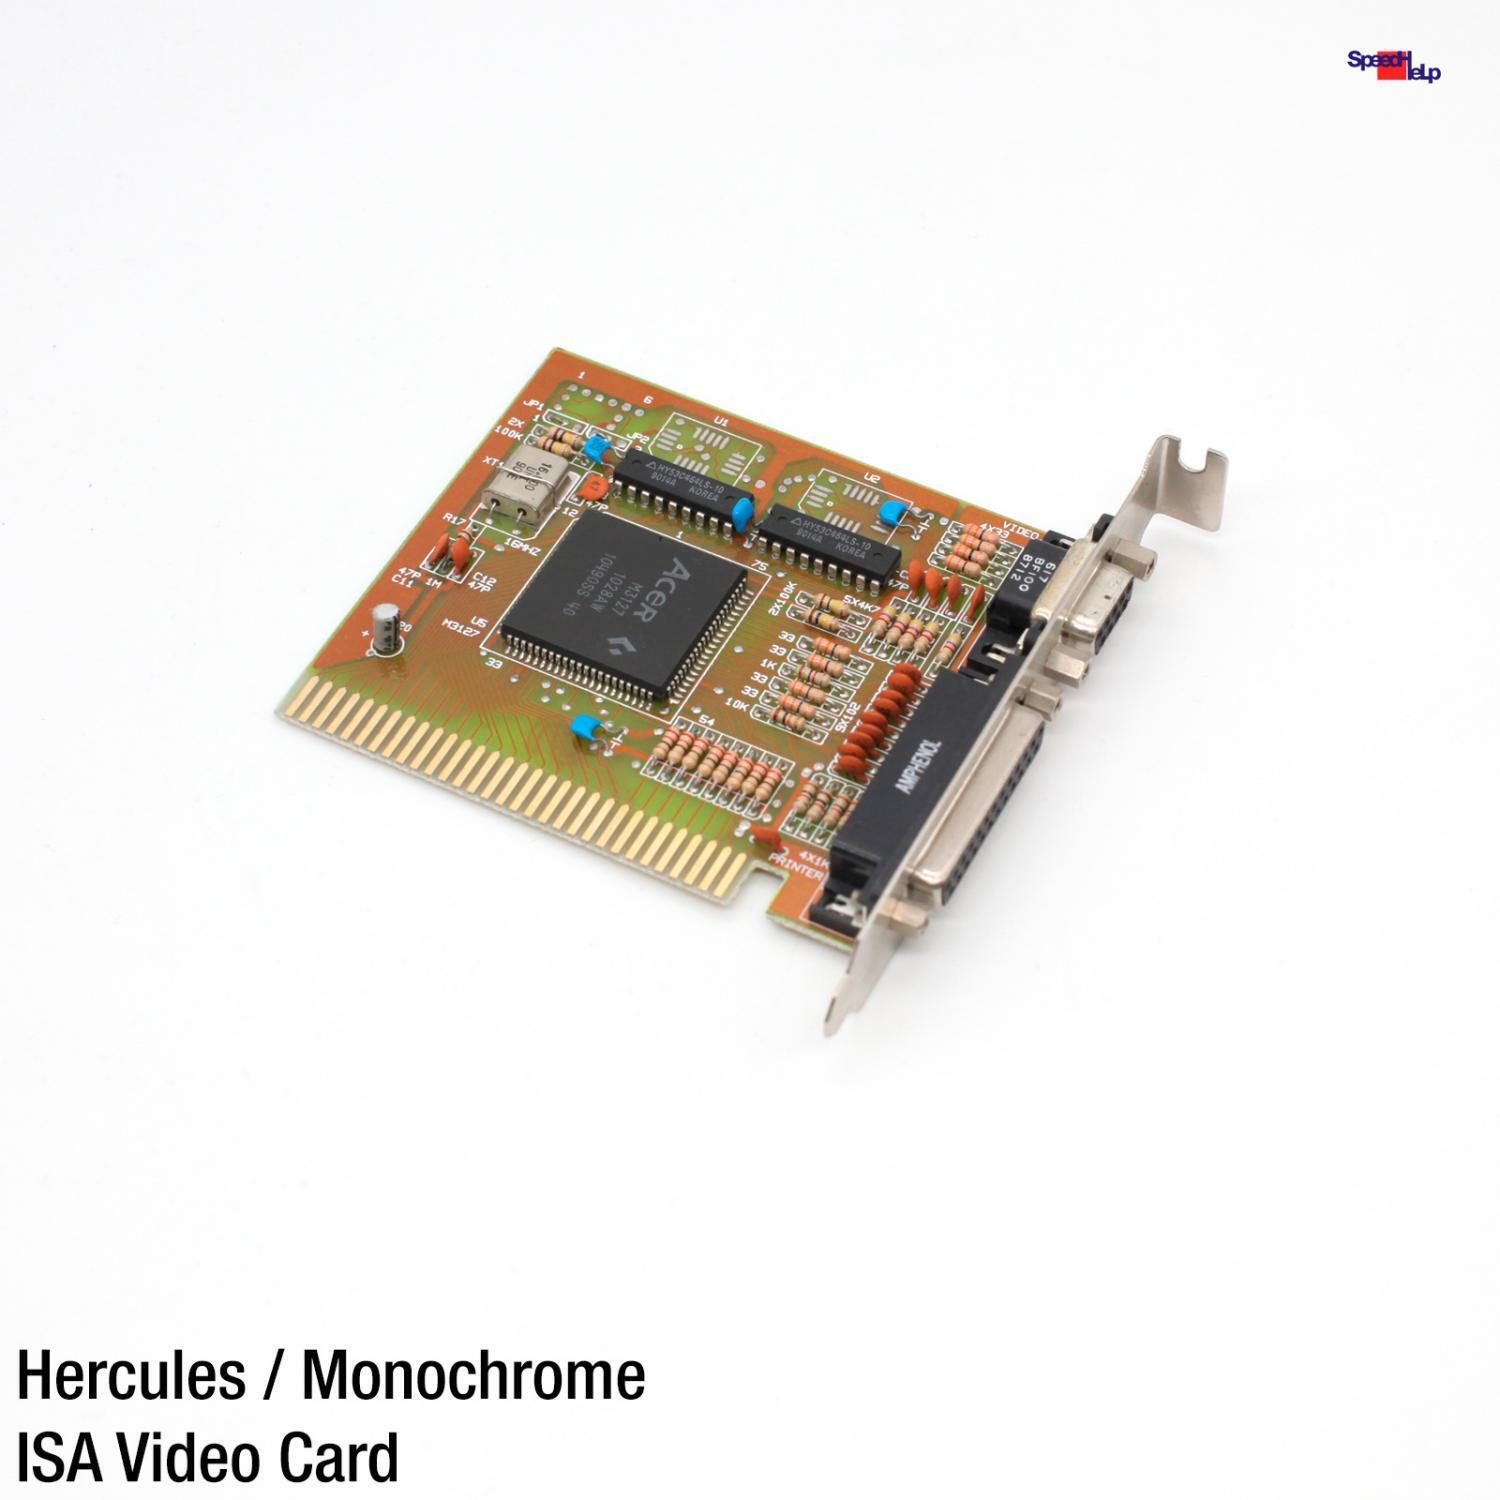 Acer M3127 Hercules Monochrome Isa 8-BIT Video Card Graphics Adapter